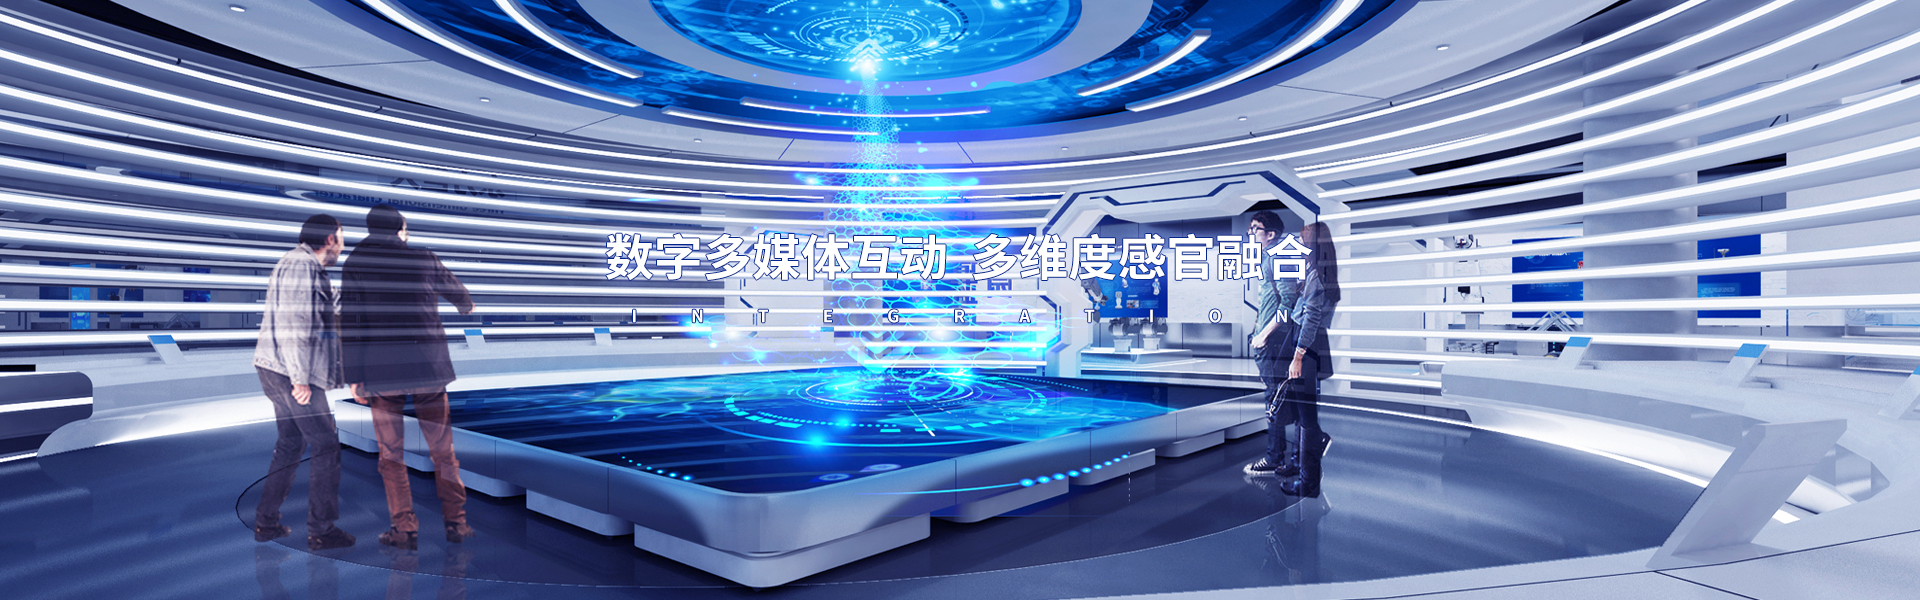 VR互动_广州聚辉电子有限公司